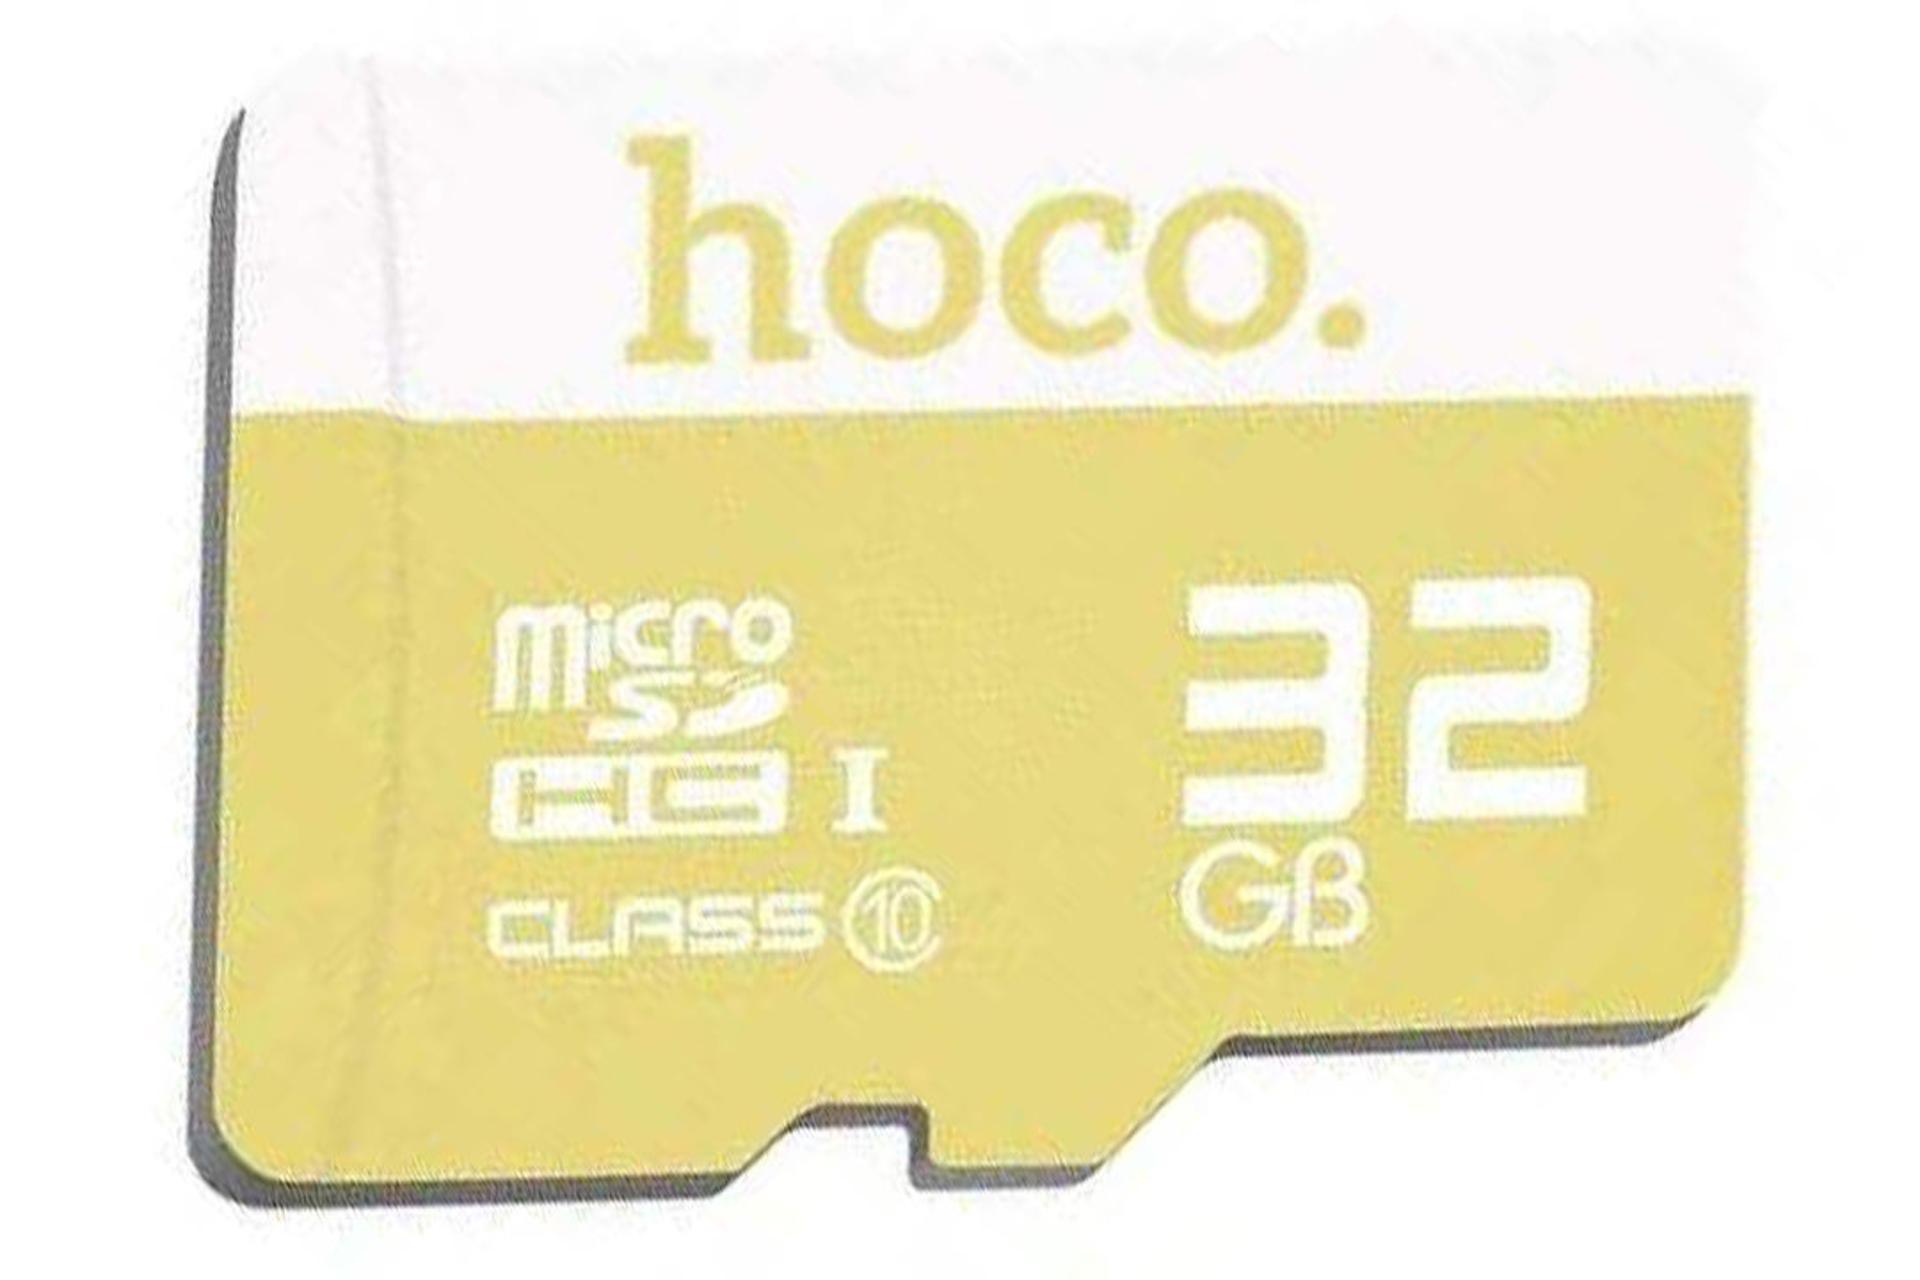 Hoco microSDHC Class 10 UHS-I U1 32GB